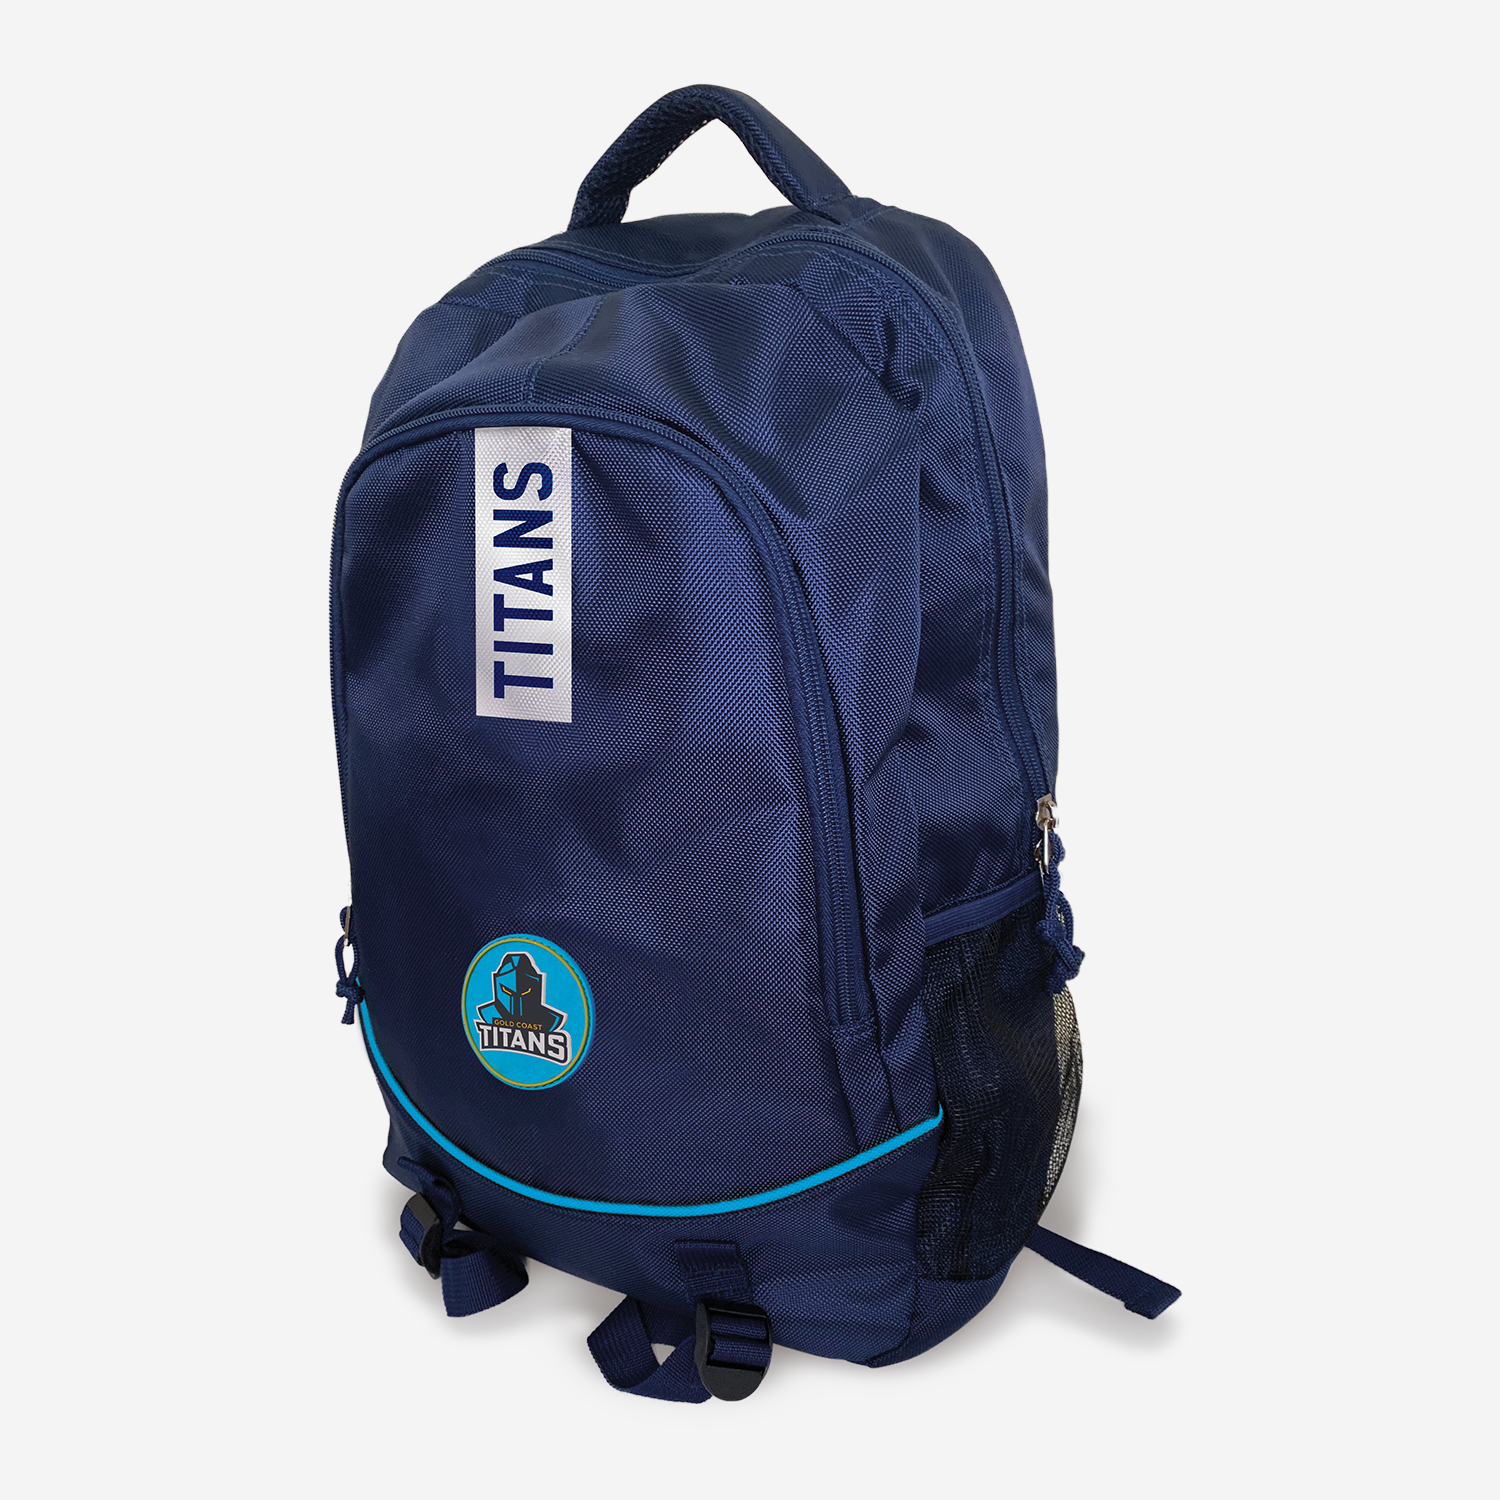 Titans Backpack